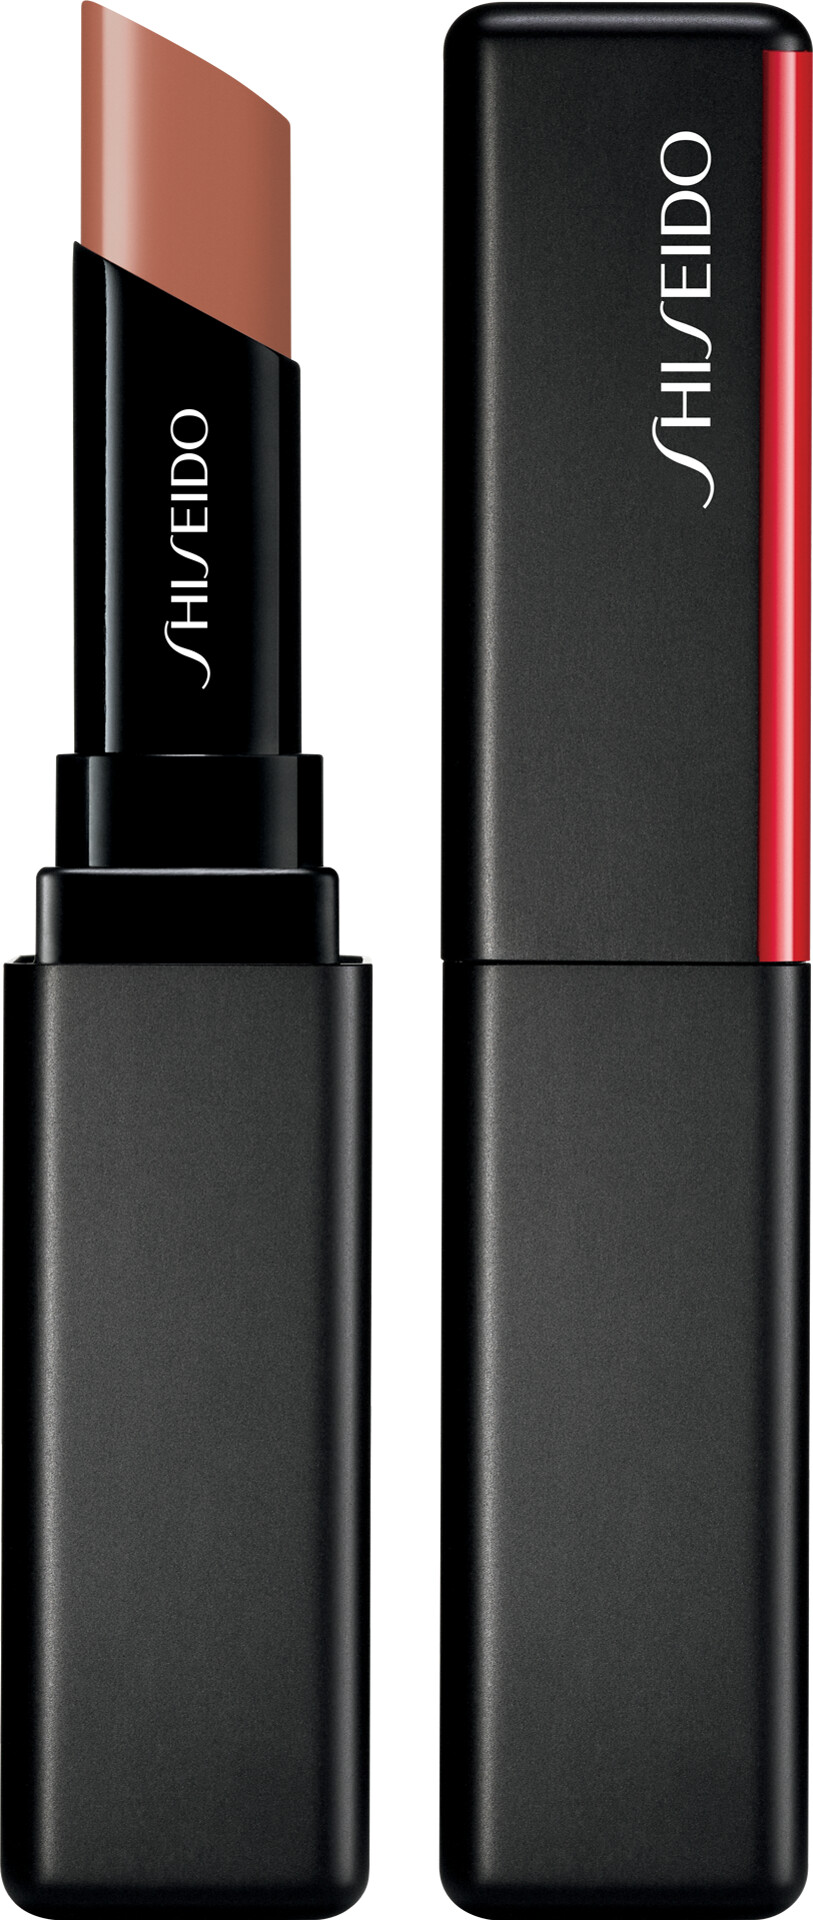 Shiseido ColorGel LipBalm 2g 118 - Bamboo